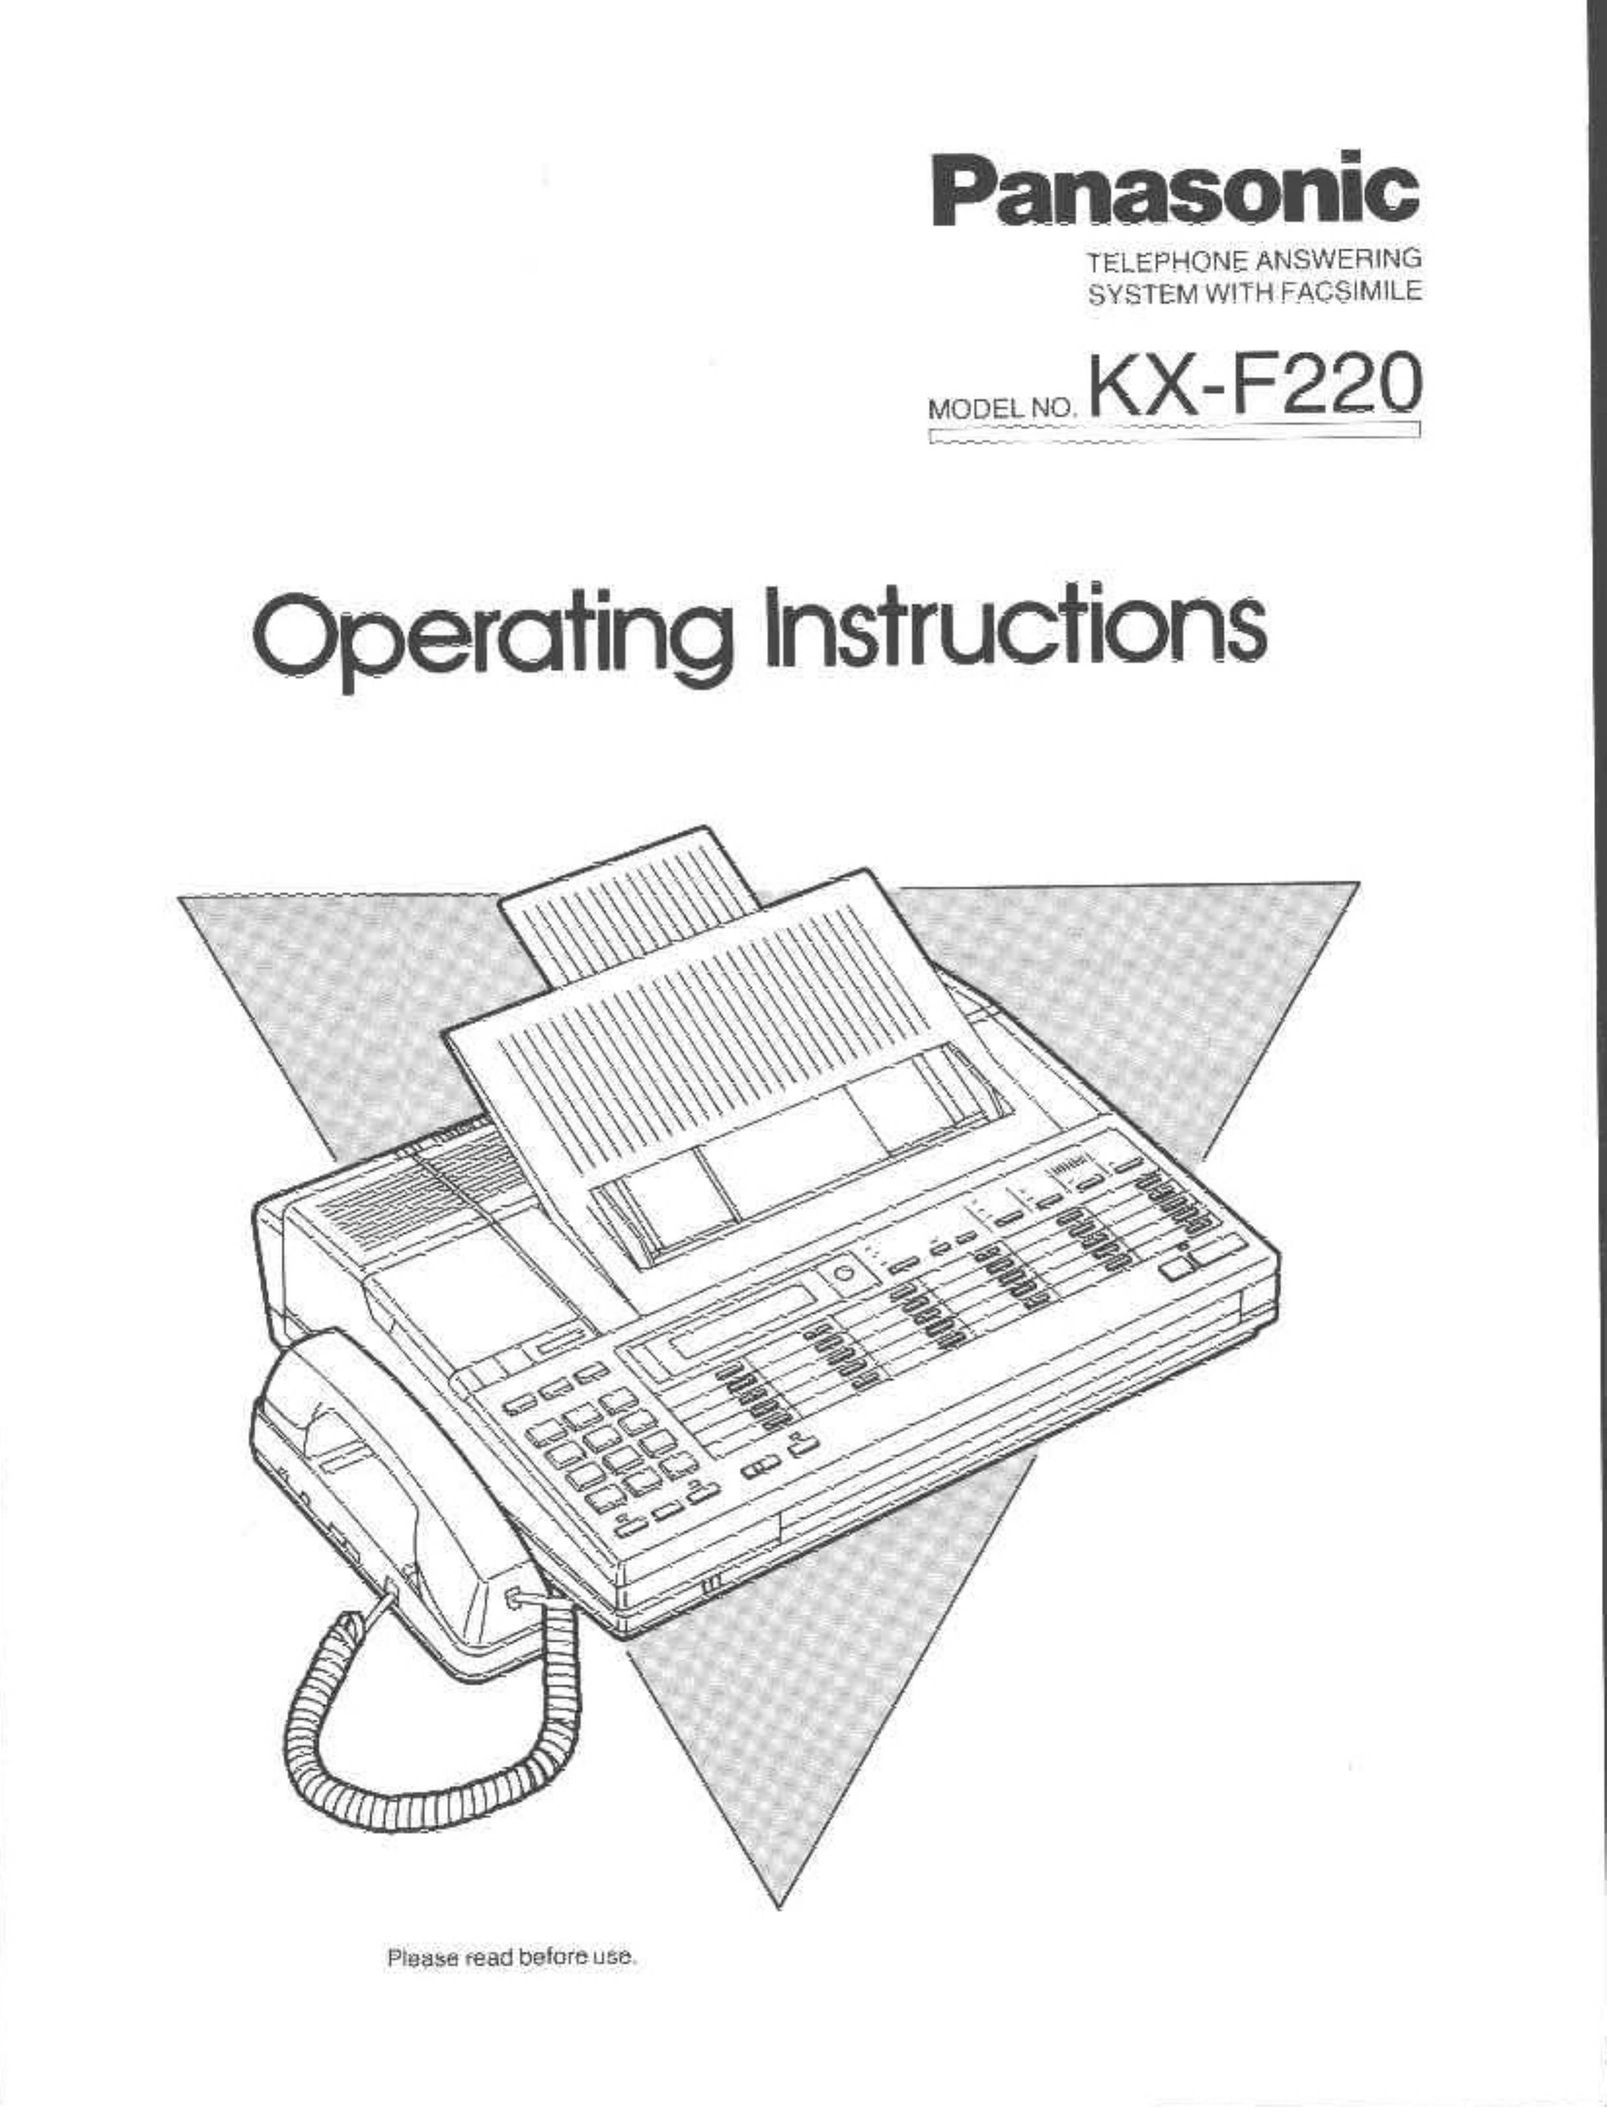 Panasonic KX-F220 Fax Machine User Manual